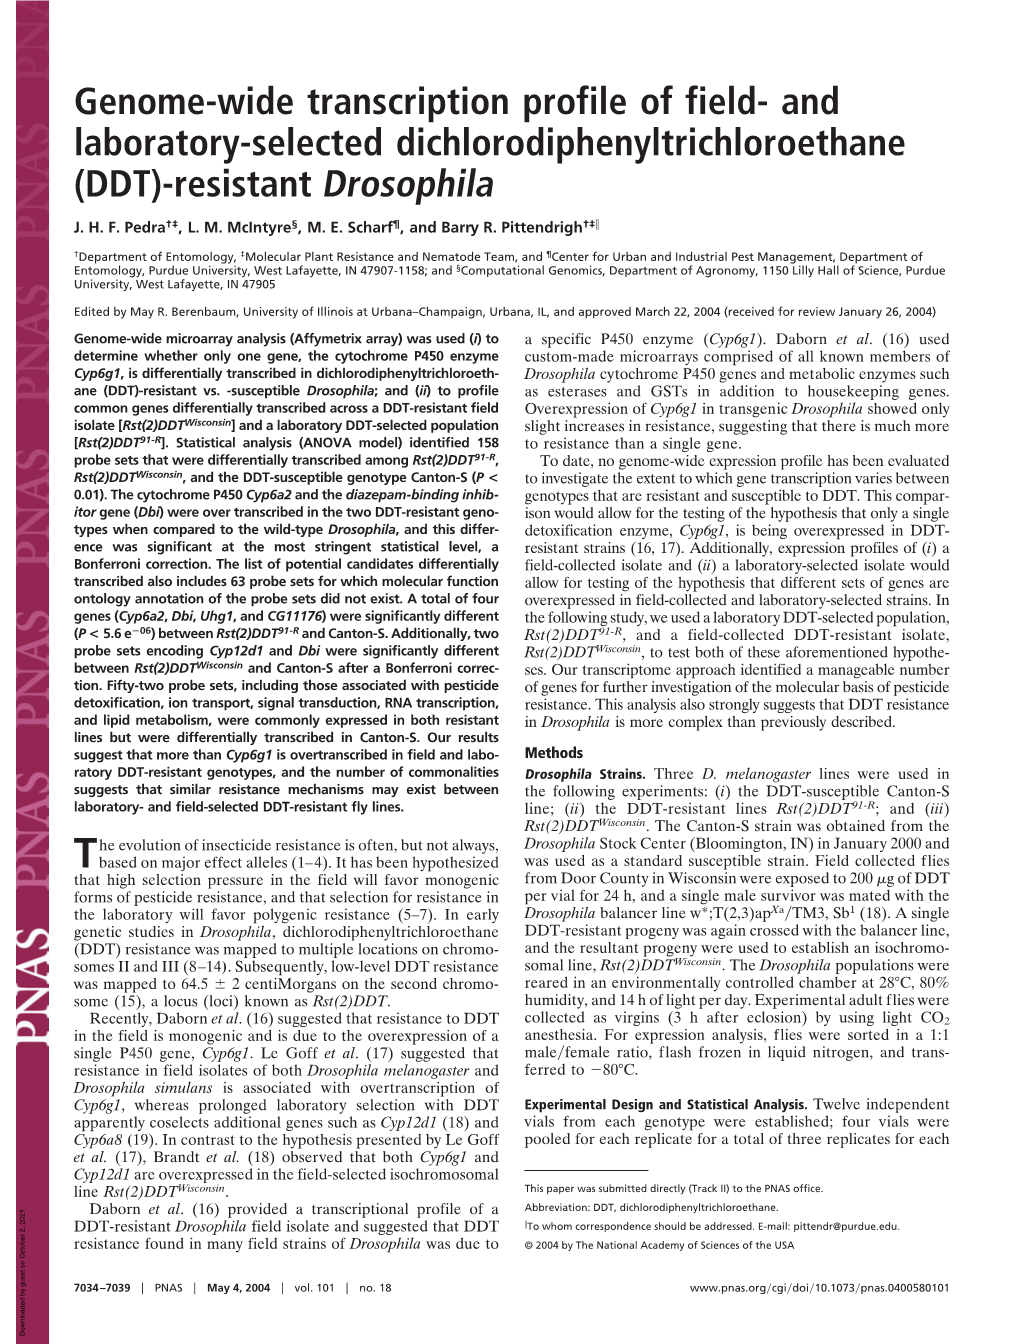 (DDT)-Resistant Drosophila